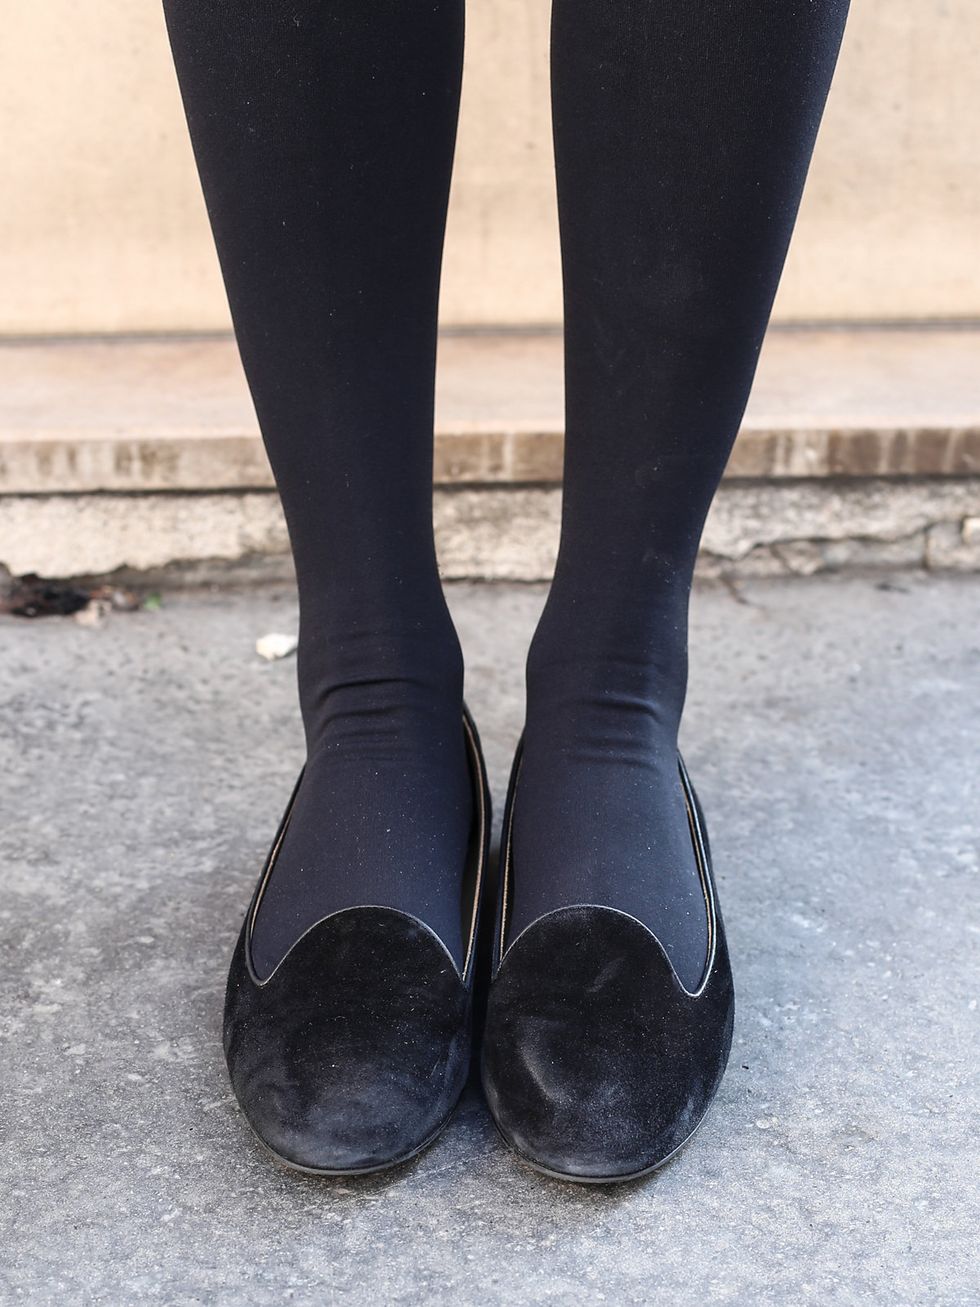 Human leg, Shoe, Style, Black, Dress shoe, Material property, Leather, Close-up, Calf, Foot, 